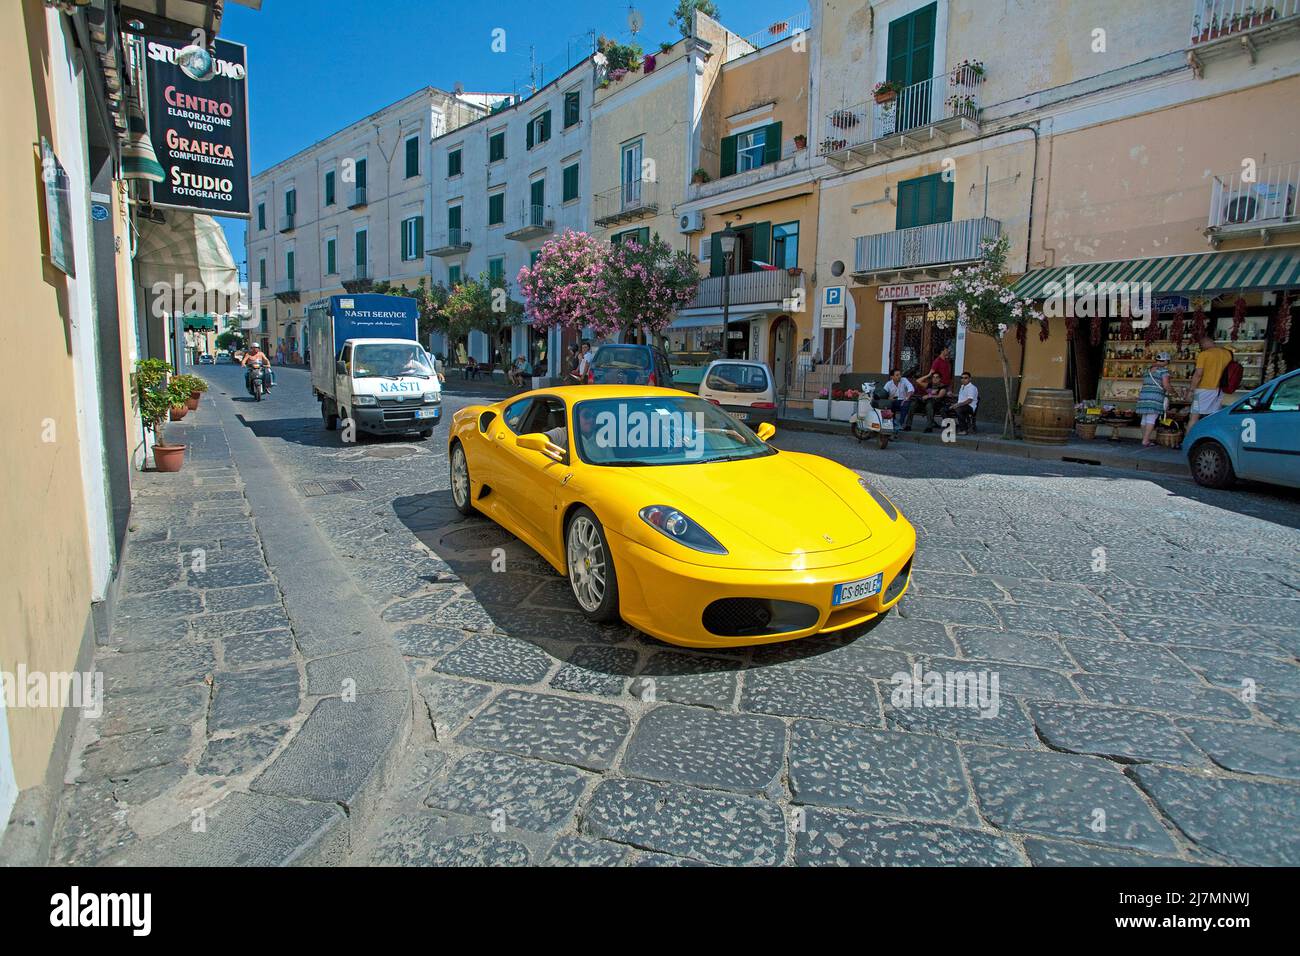 Gelber Ferrari in der Altstadt von Ischia Ponte, Insel Ischia, Golf von Neapel, Kampanien, Italien, Mittelmeer, Europa | Yellow Ferrari sport car at t Stock Photo